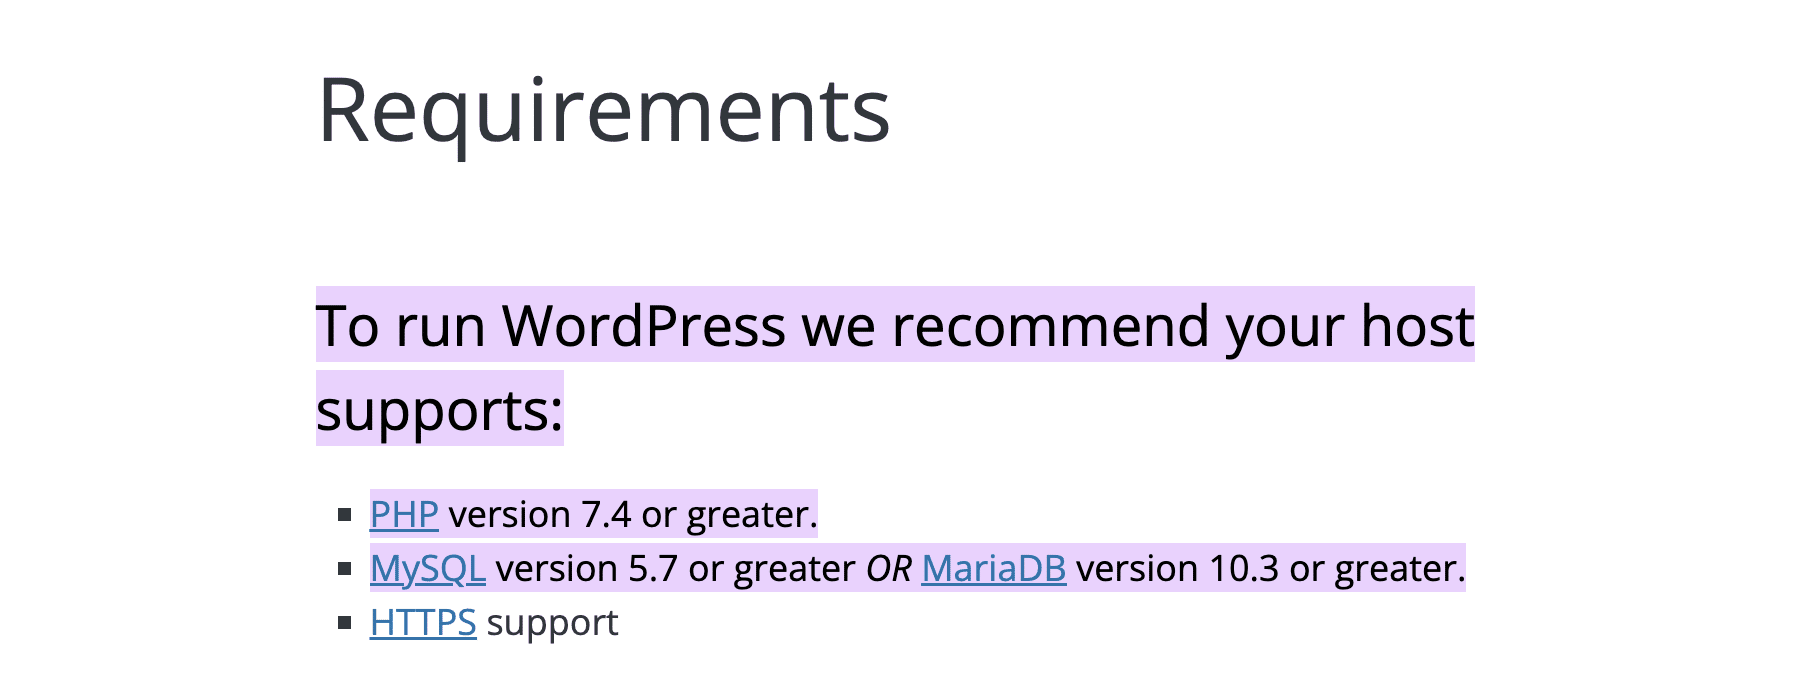 Requisitos do WordPress